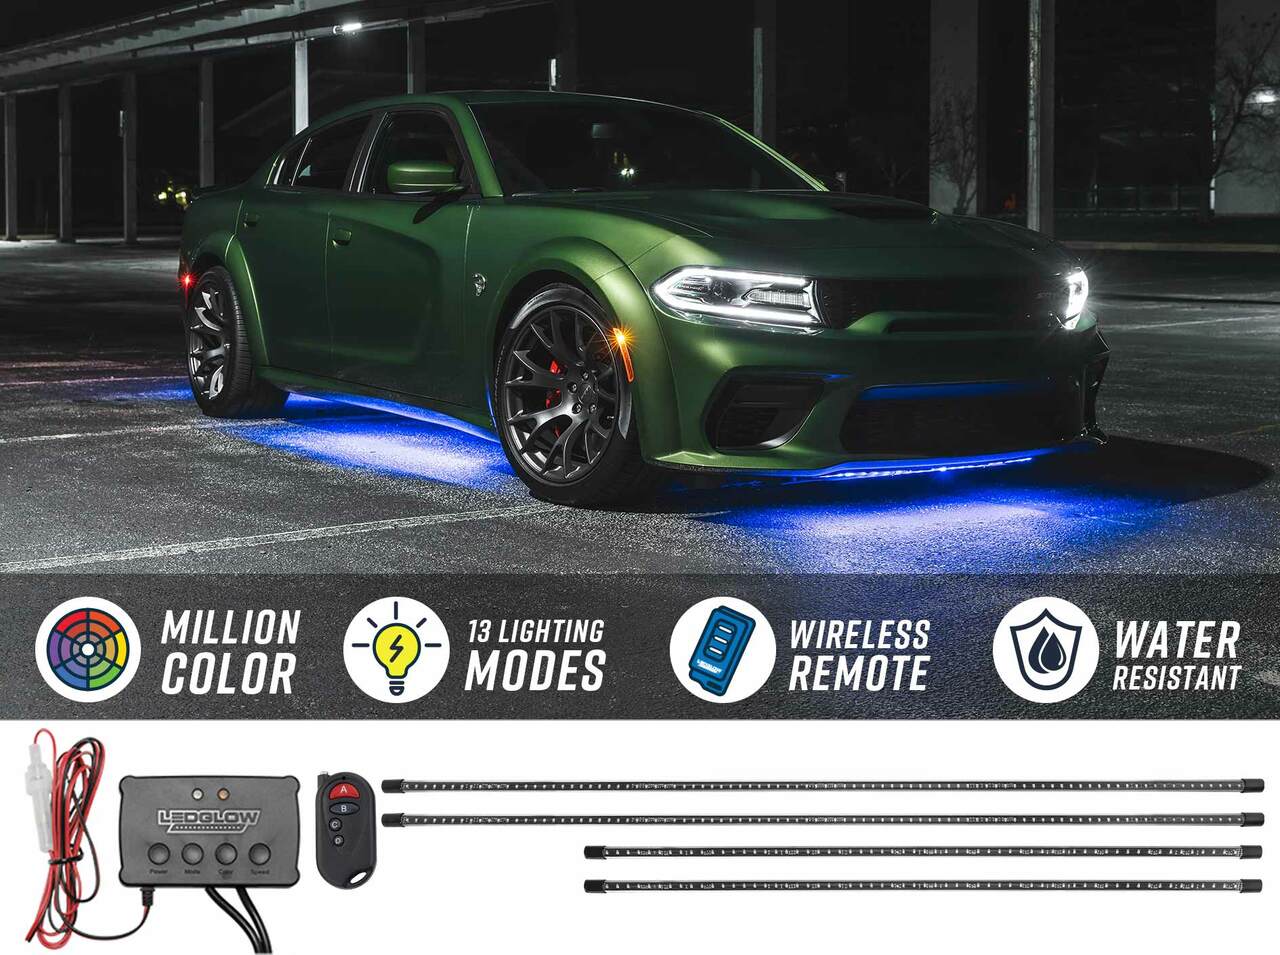 Million Color Underglow LED Kit w/ Wireless Remote - AutoCity Imports